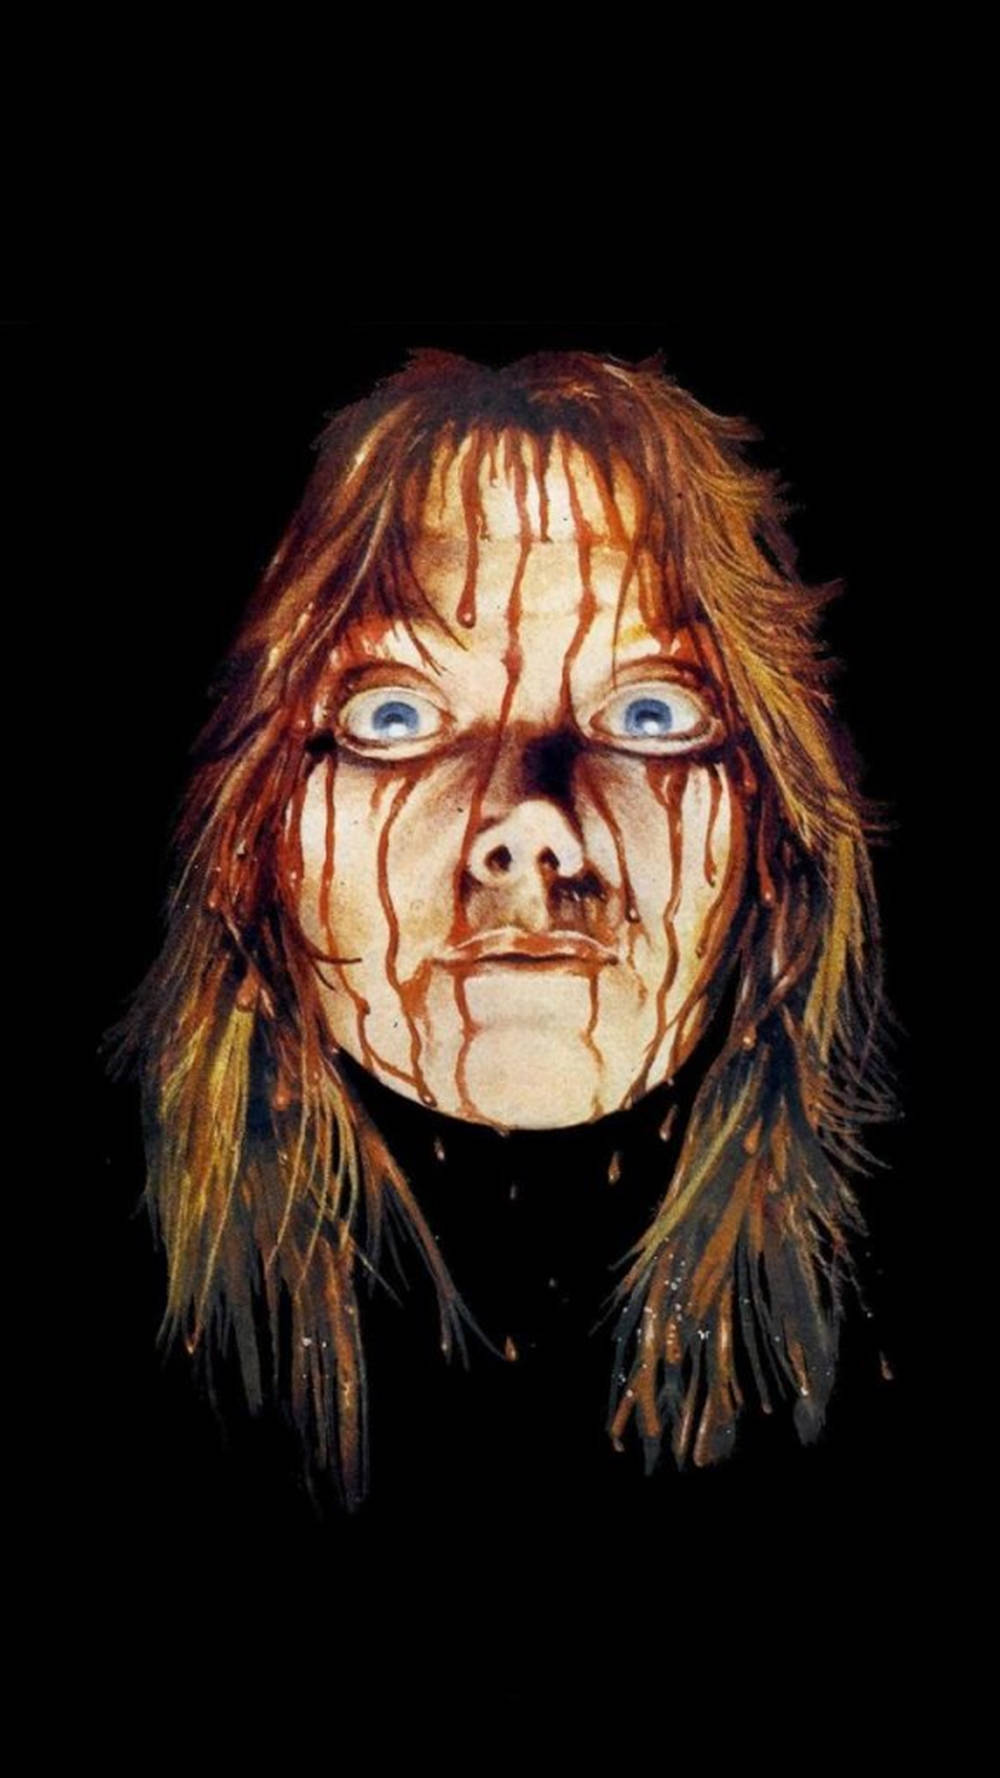 Sissy Spacek Horror Movie Icon Carrie Background